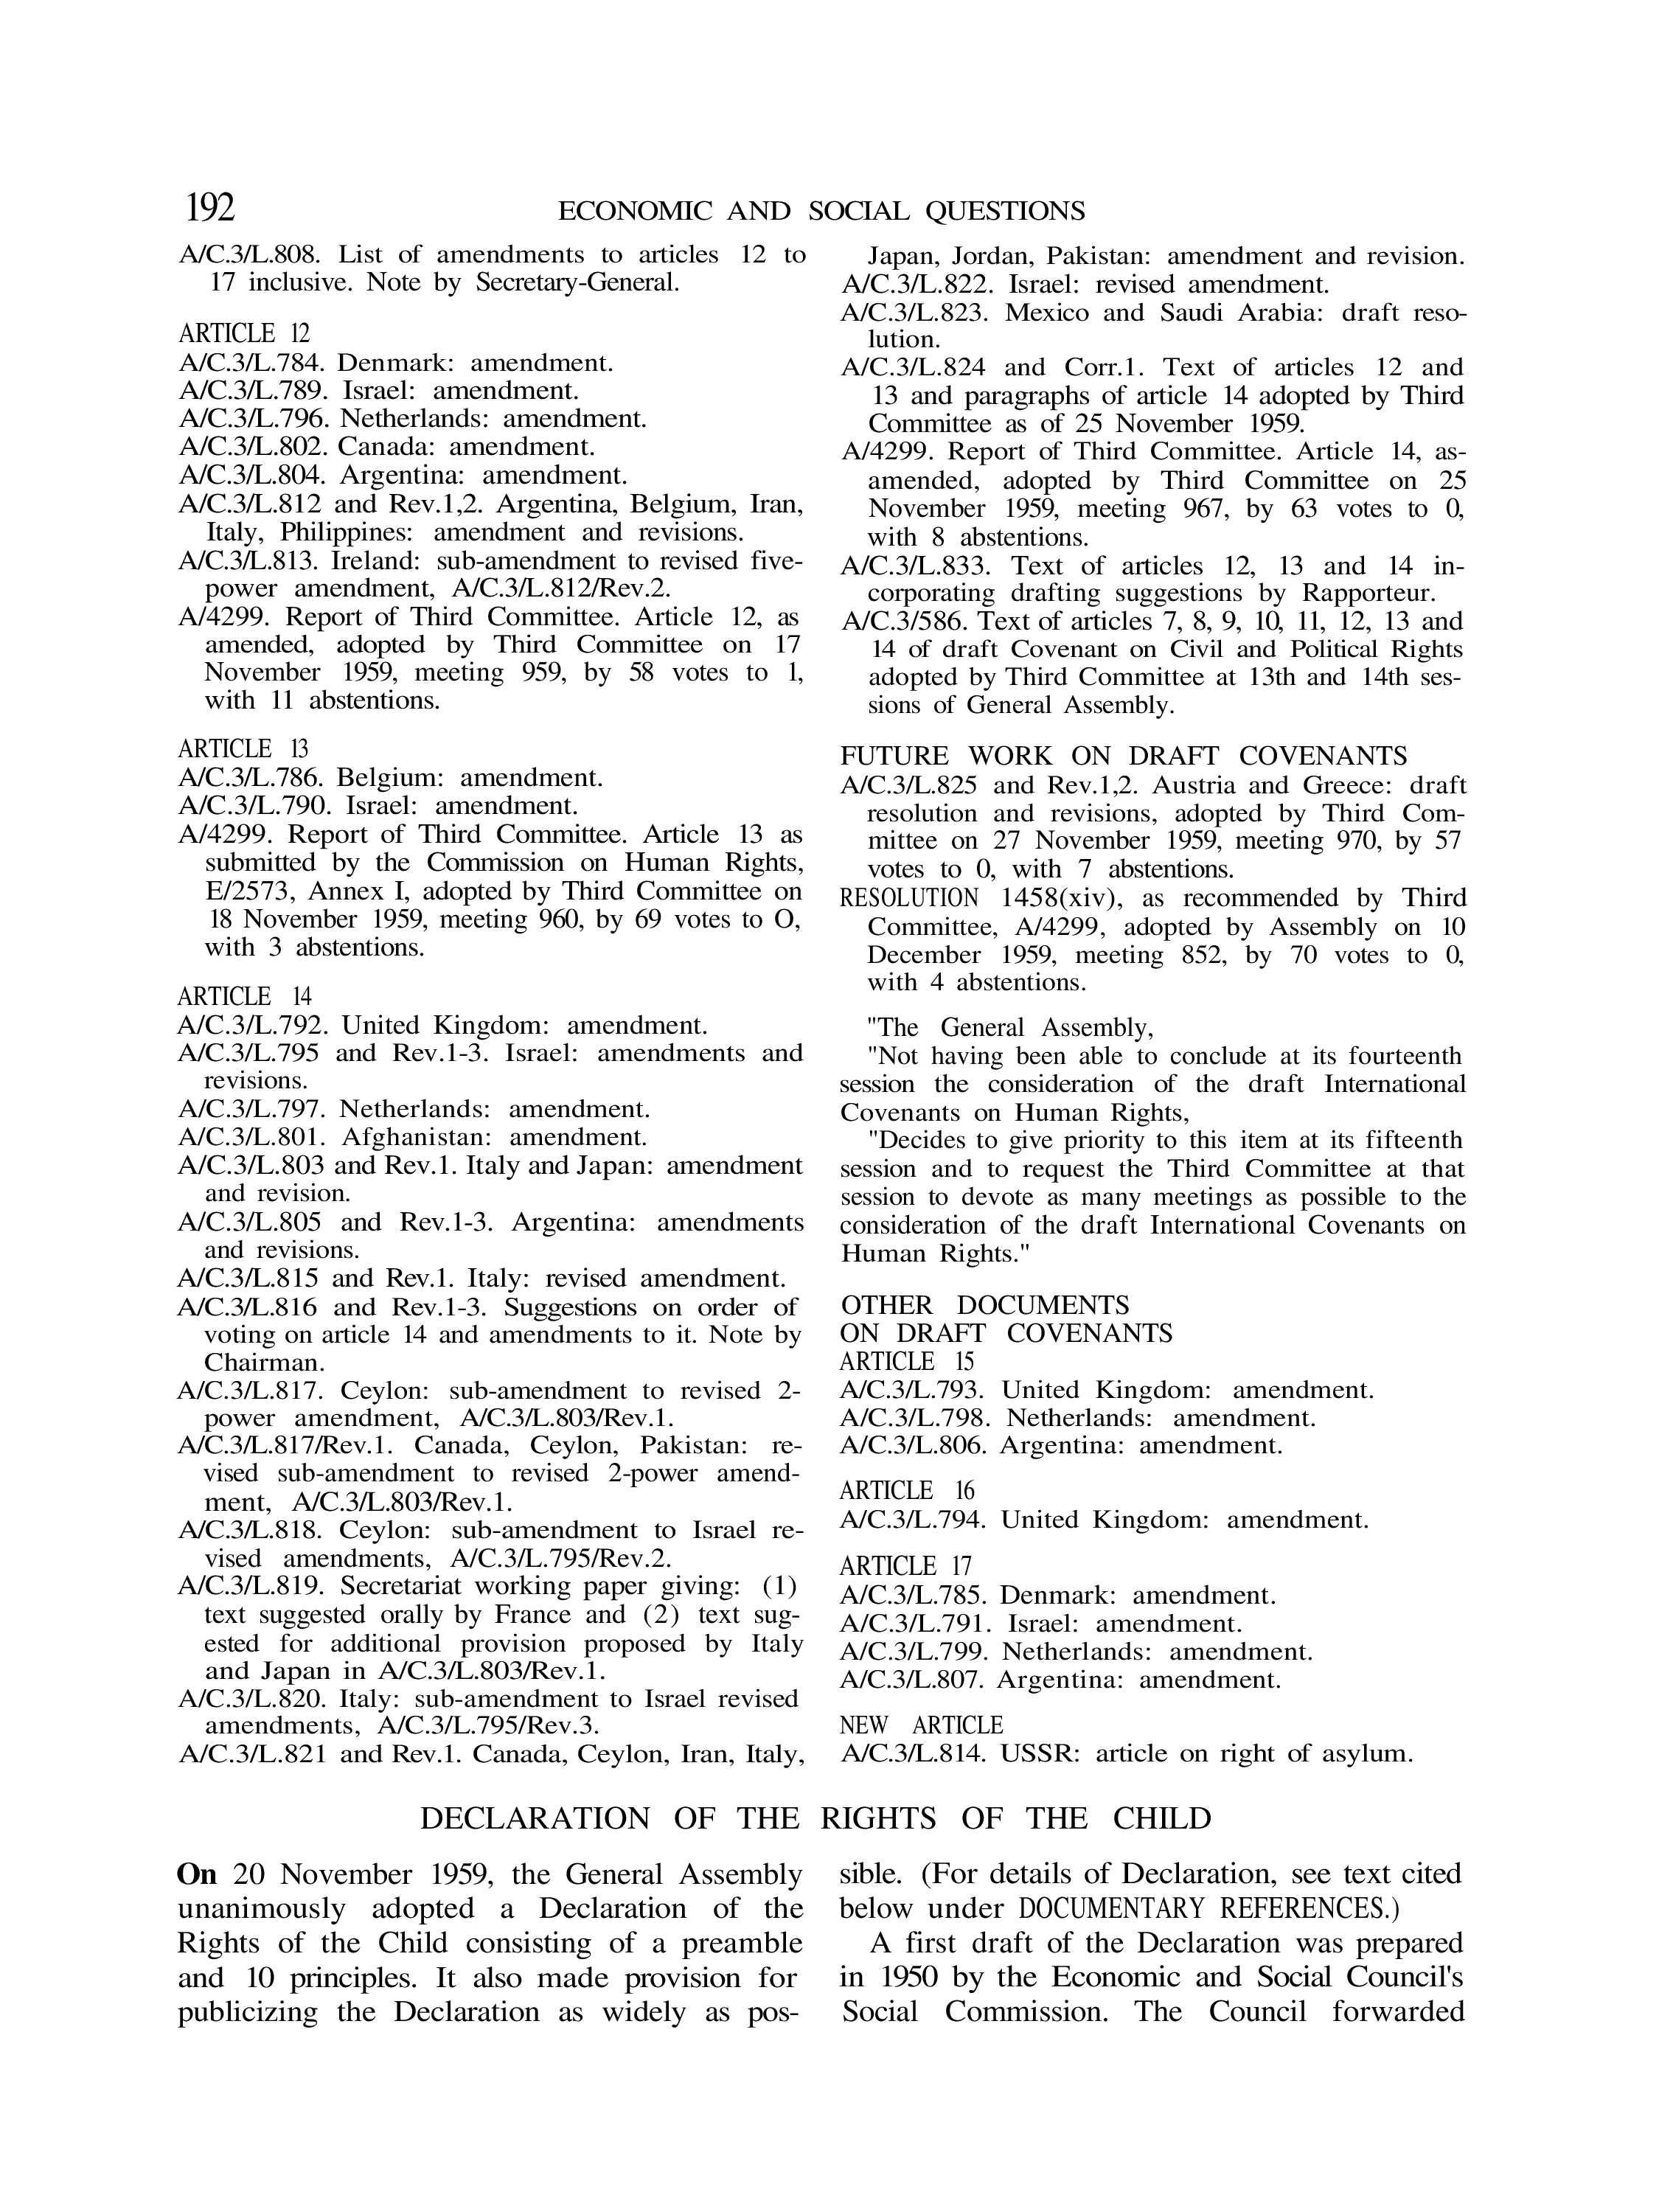 YUN Volume_Page 1959_203